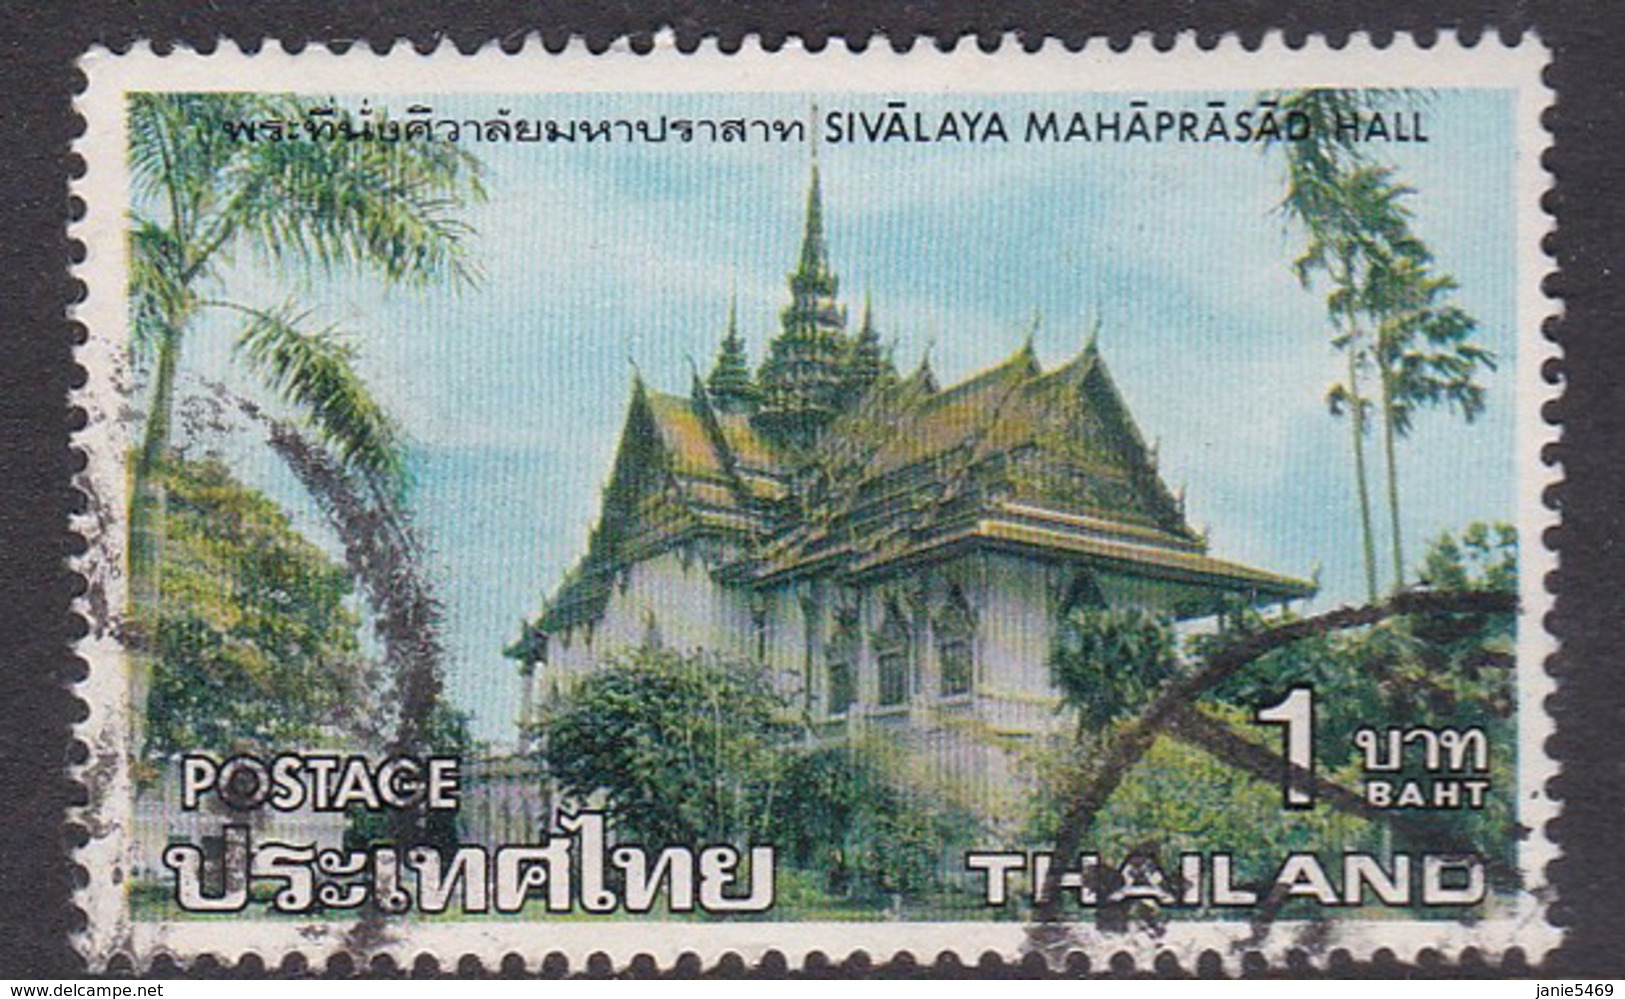 Thailand SG 909 1976 Royal Halls 1 Baht, Sivalaya Used - Thailand